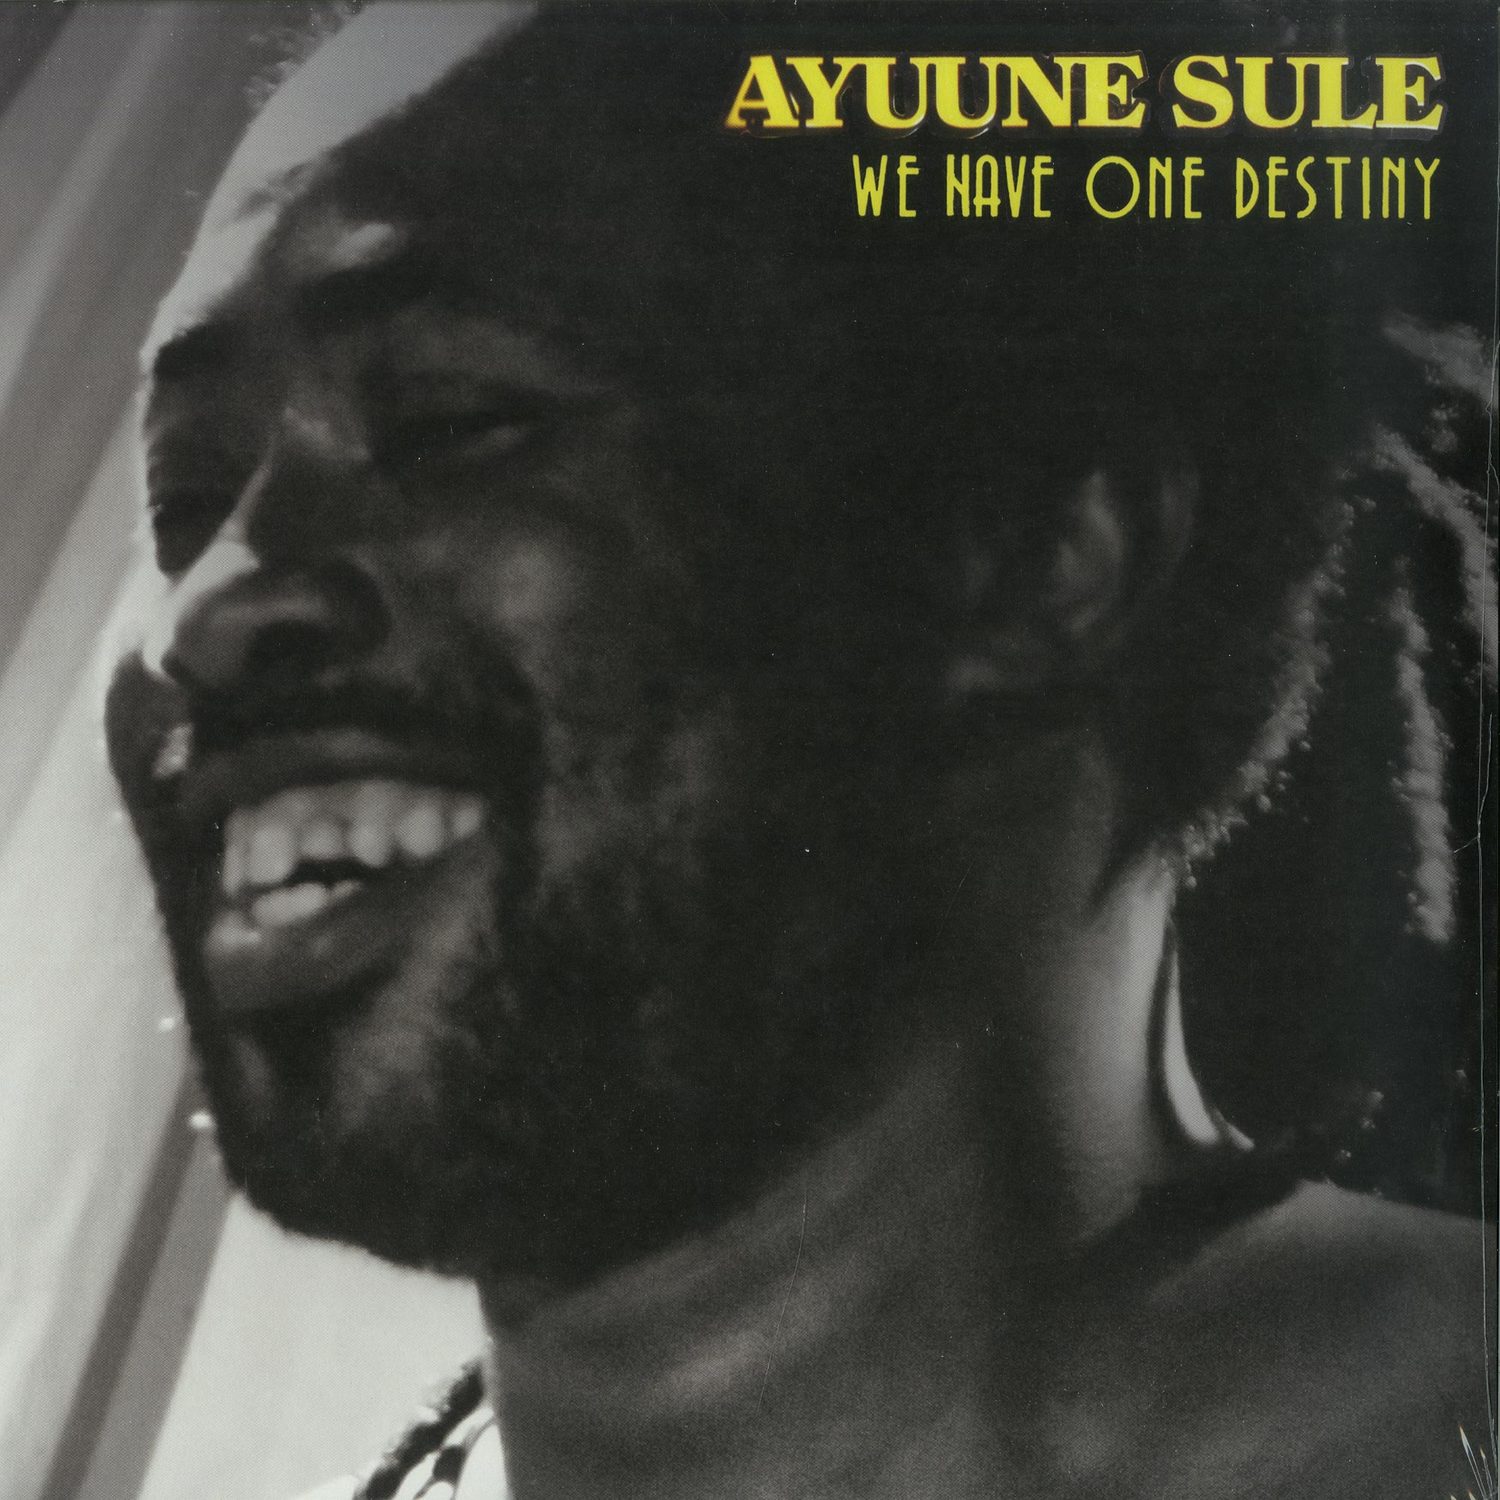 Ayuune Sule - WE HAVE ONE DESTINY 